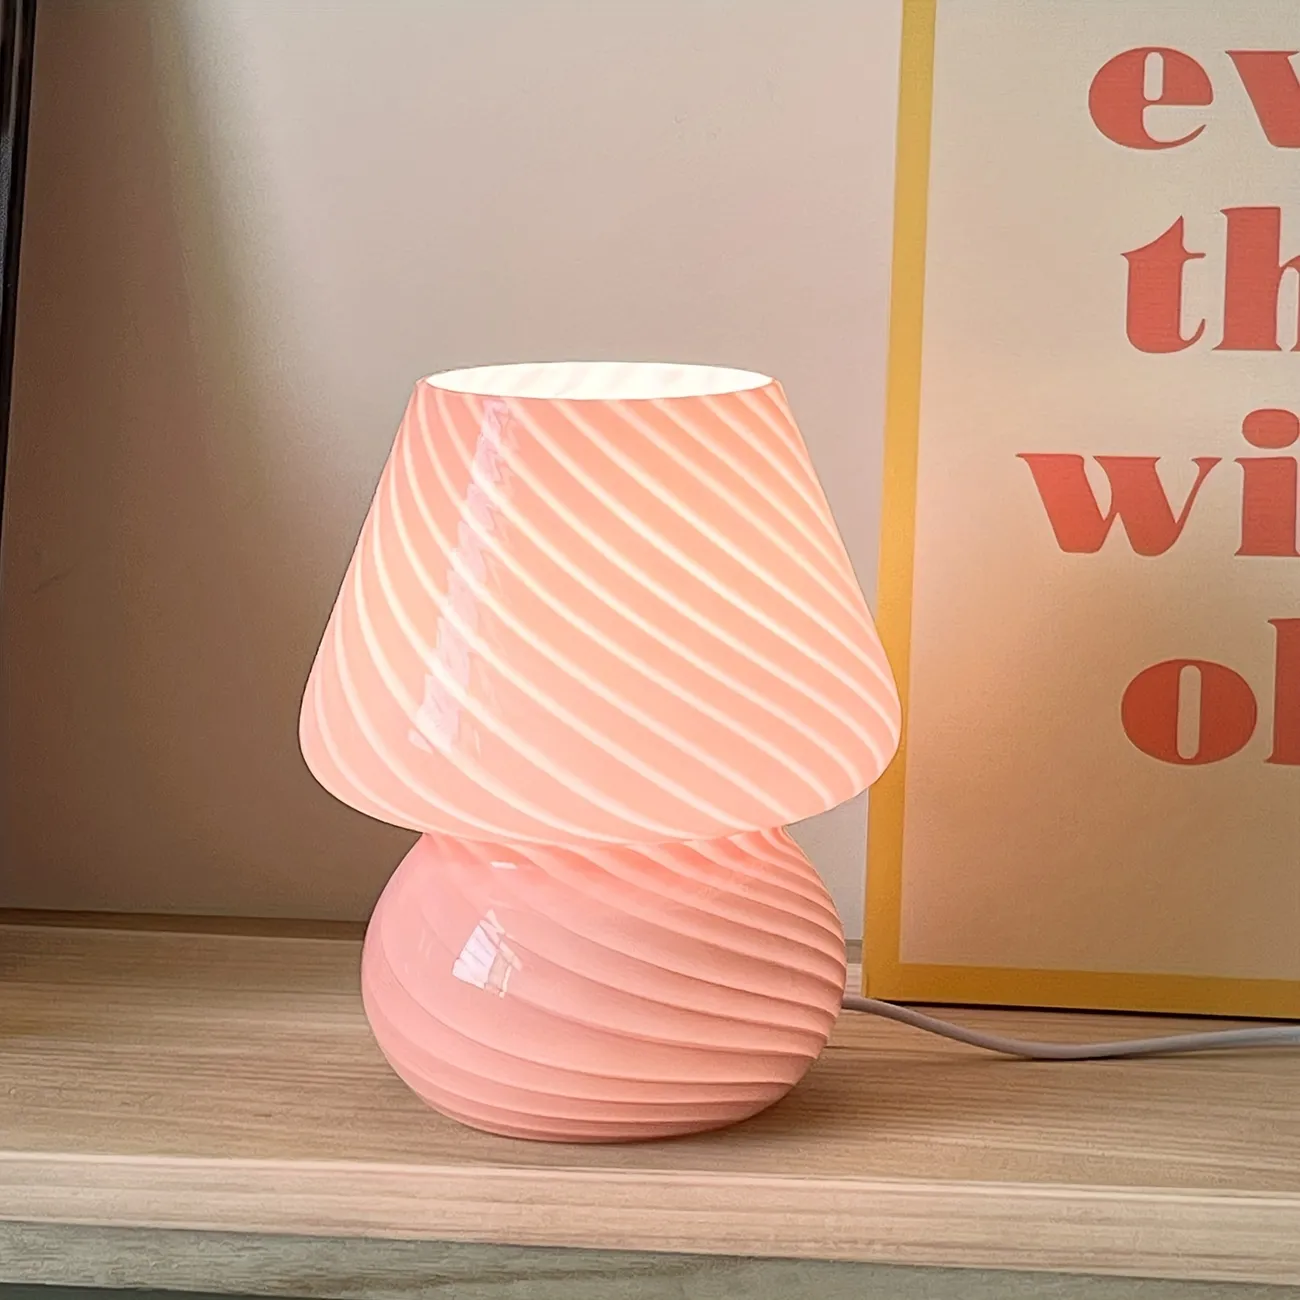 Vintage Striped Mushroom Table Lamp - A Delightful Ambient Light for Kids' Bedroom, Living Room or Girl's Gift!